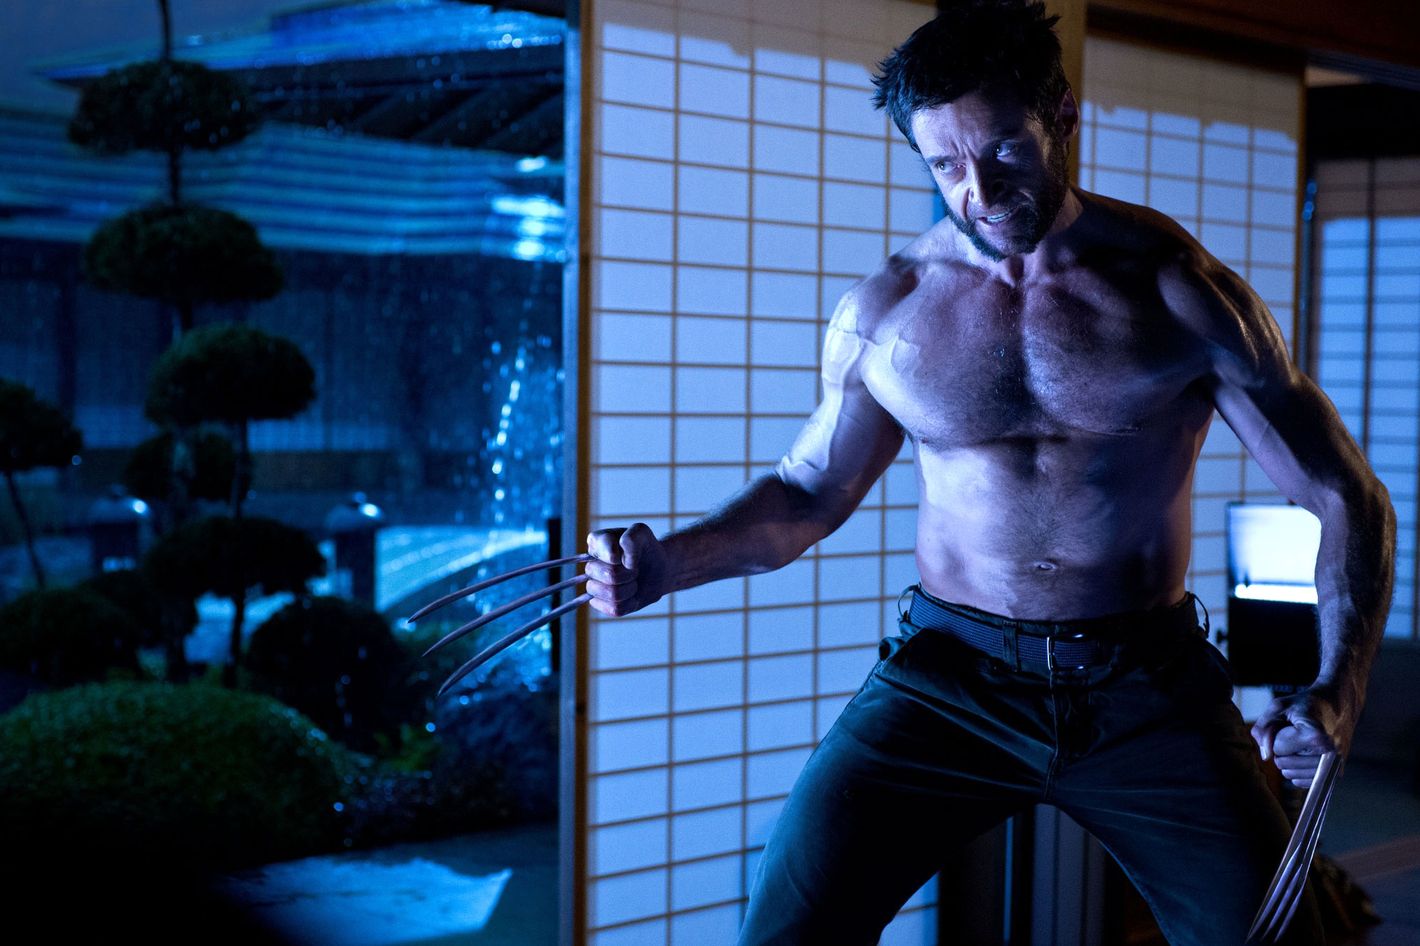 Edelstein on The Wolverine: Hugh Jackman's Logan Goes East